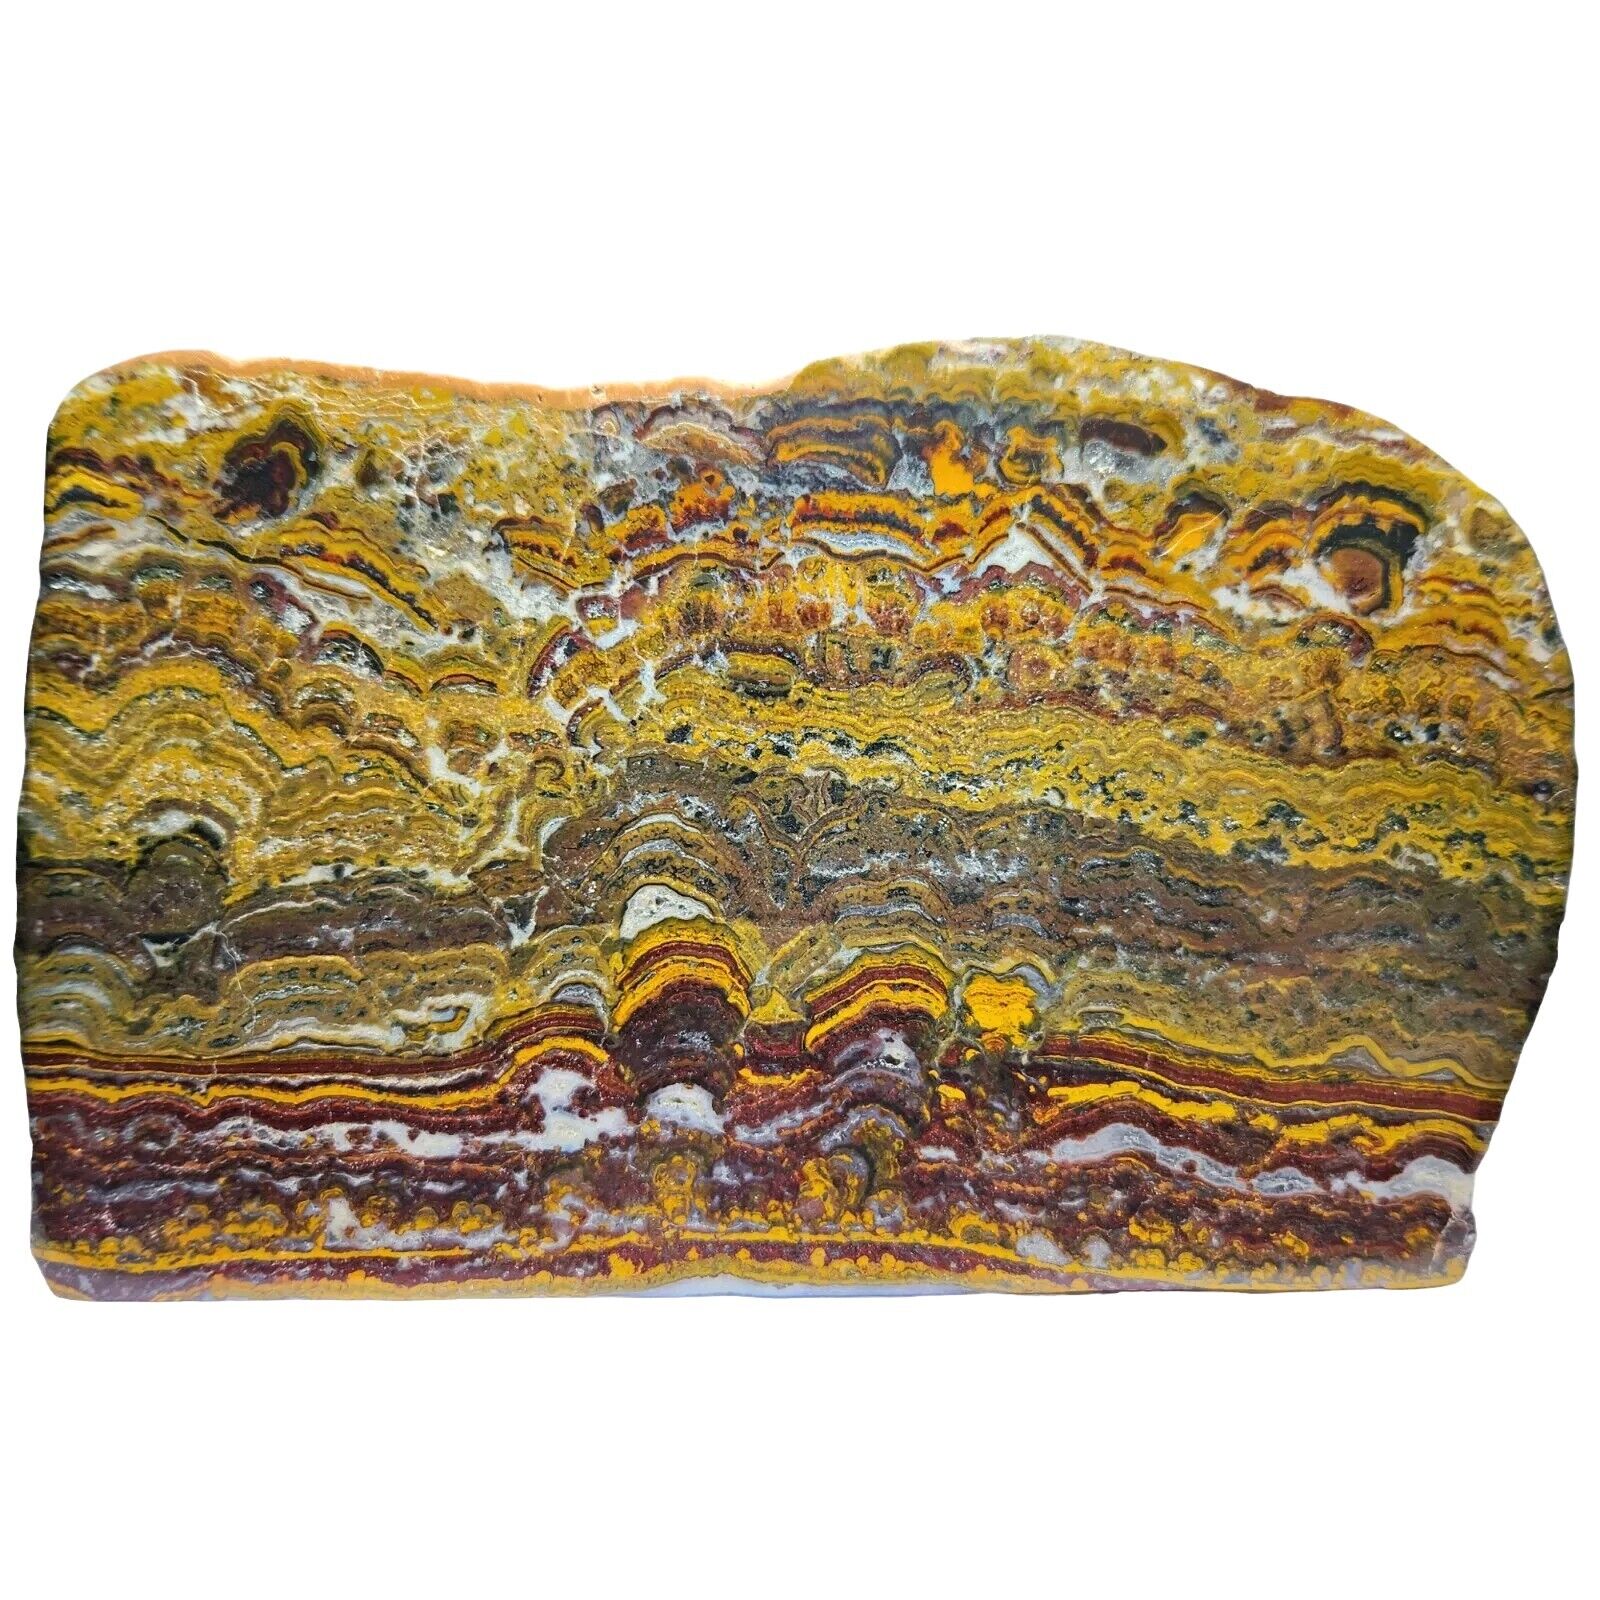 Rare Large Polished Stromatolite Fossil, Apple Valley Jasper, Morocco, 467g